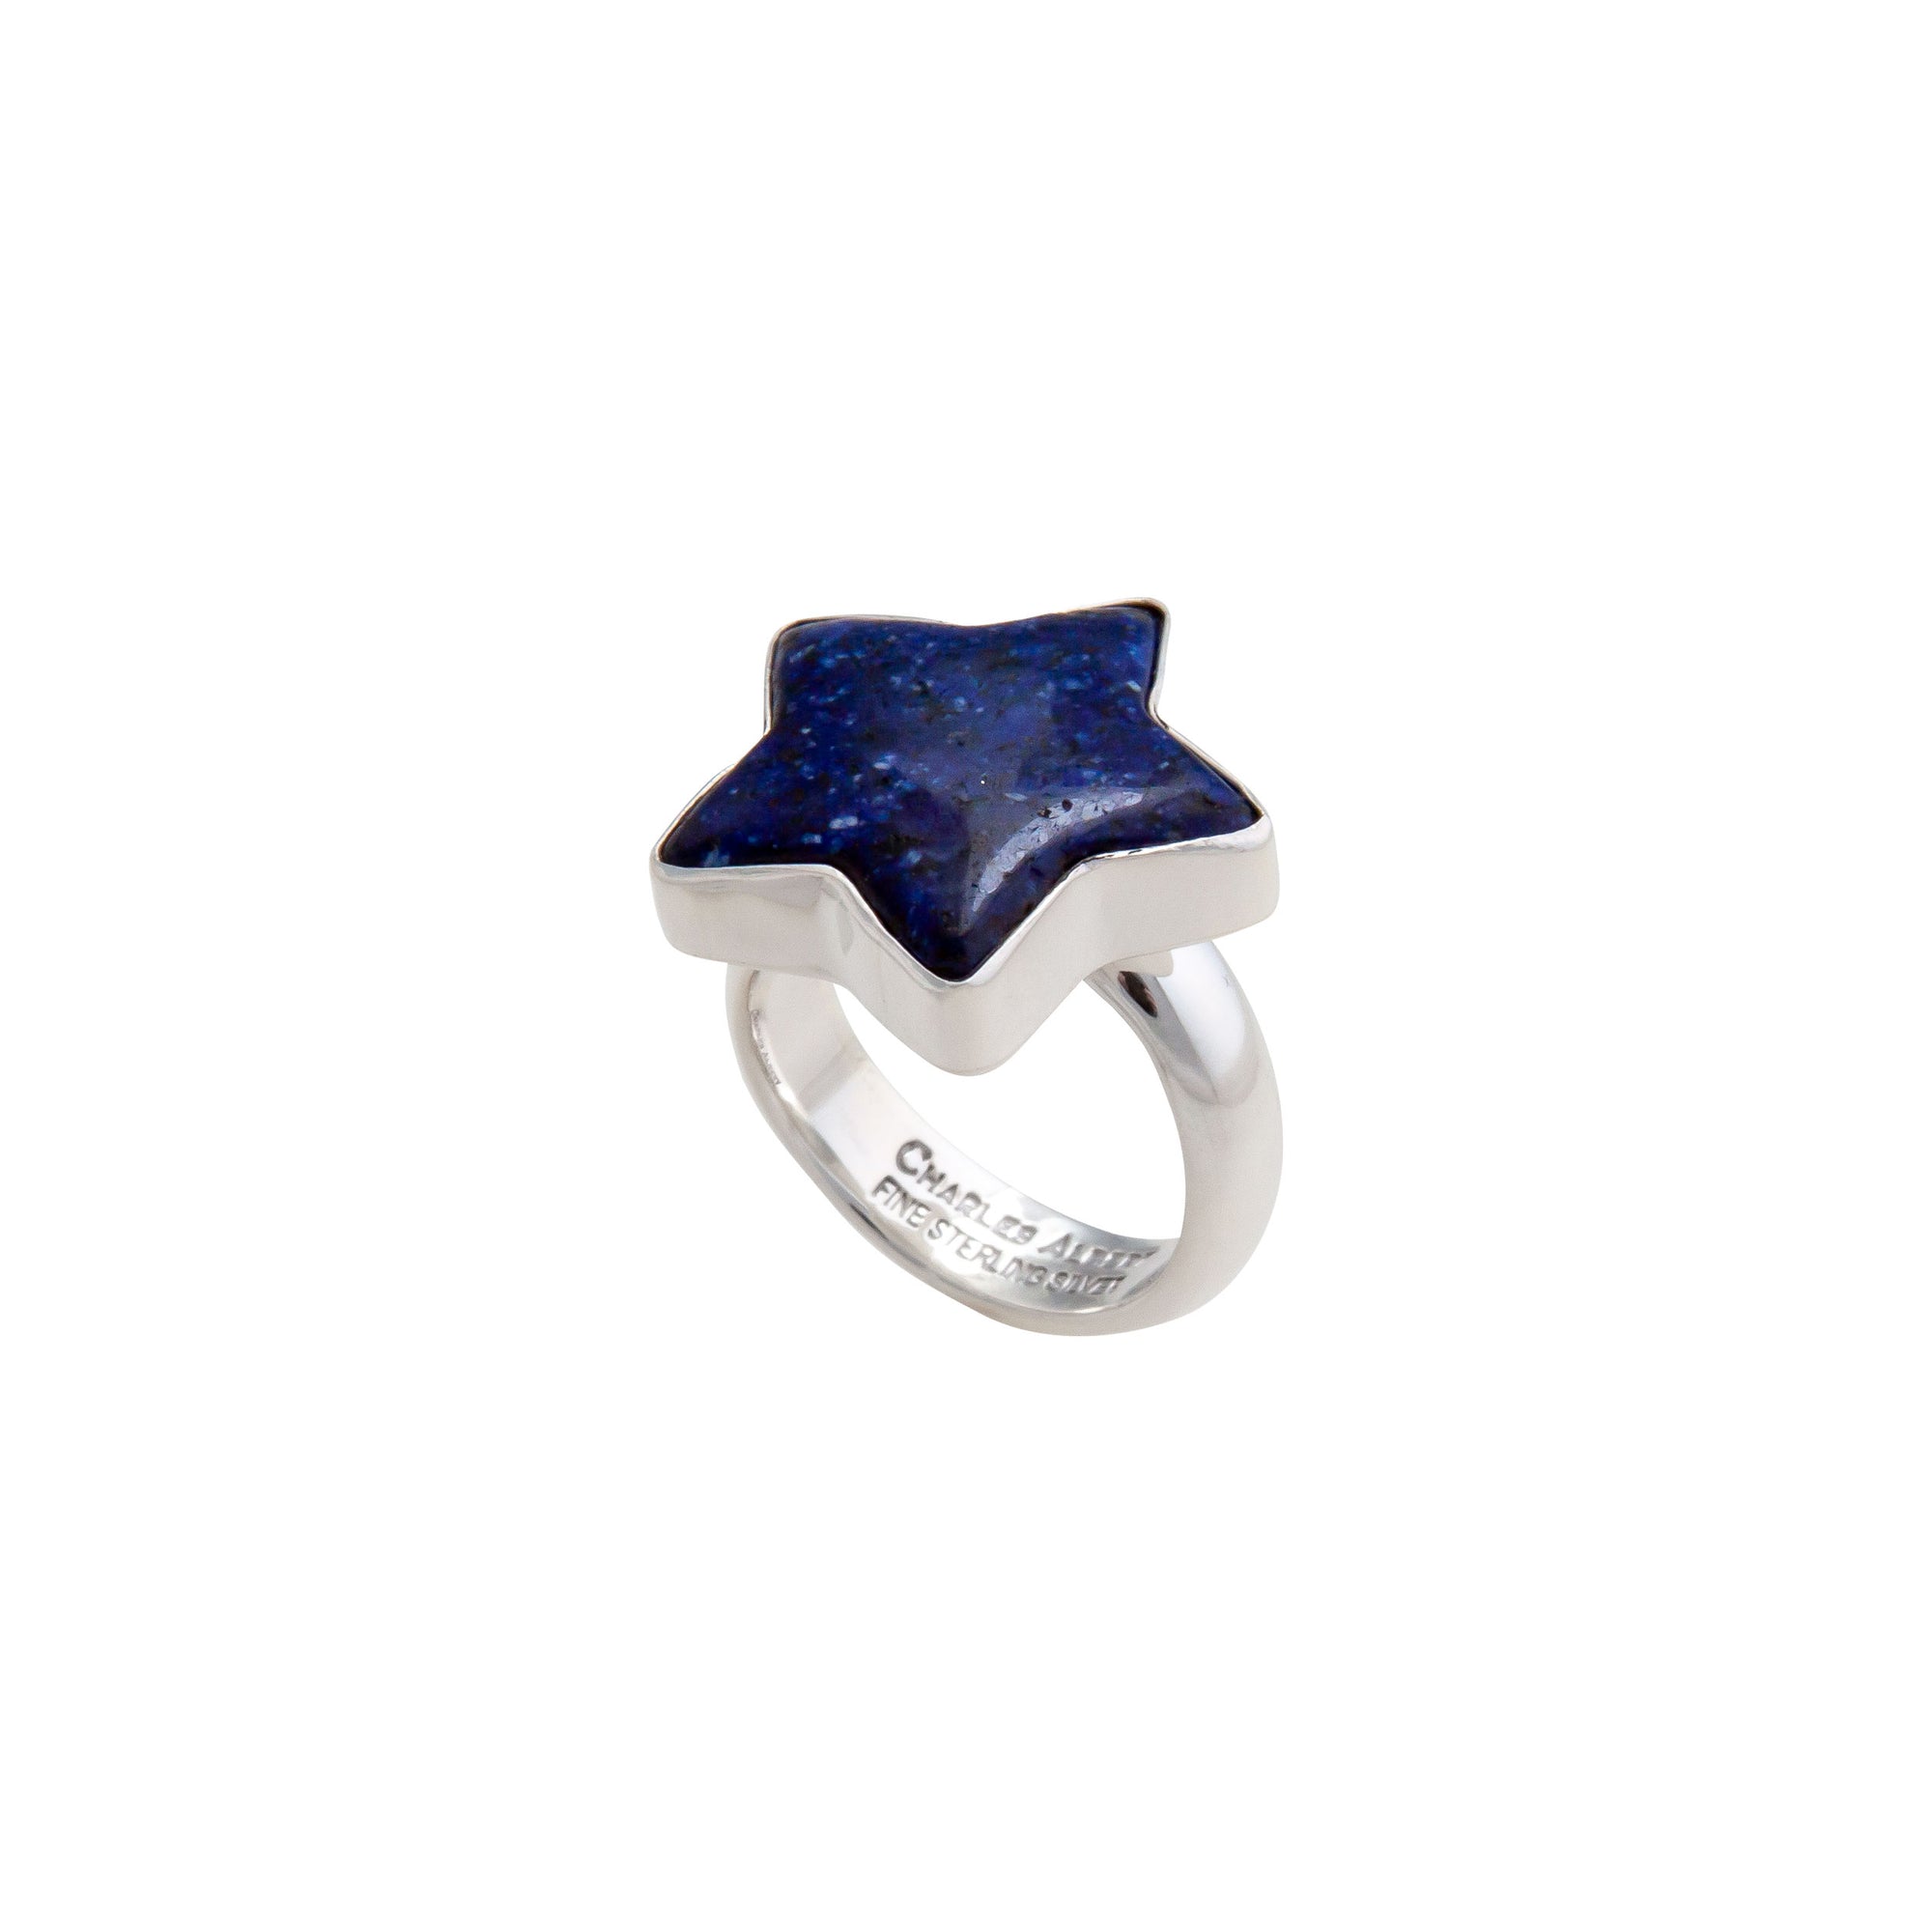 Sterling Silver Lapis lazuli Star Adjustable Ring / Charles Albert Jewelry